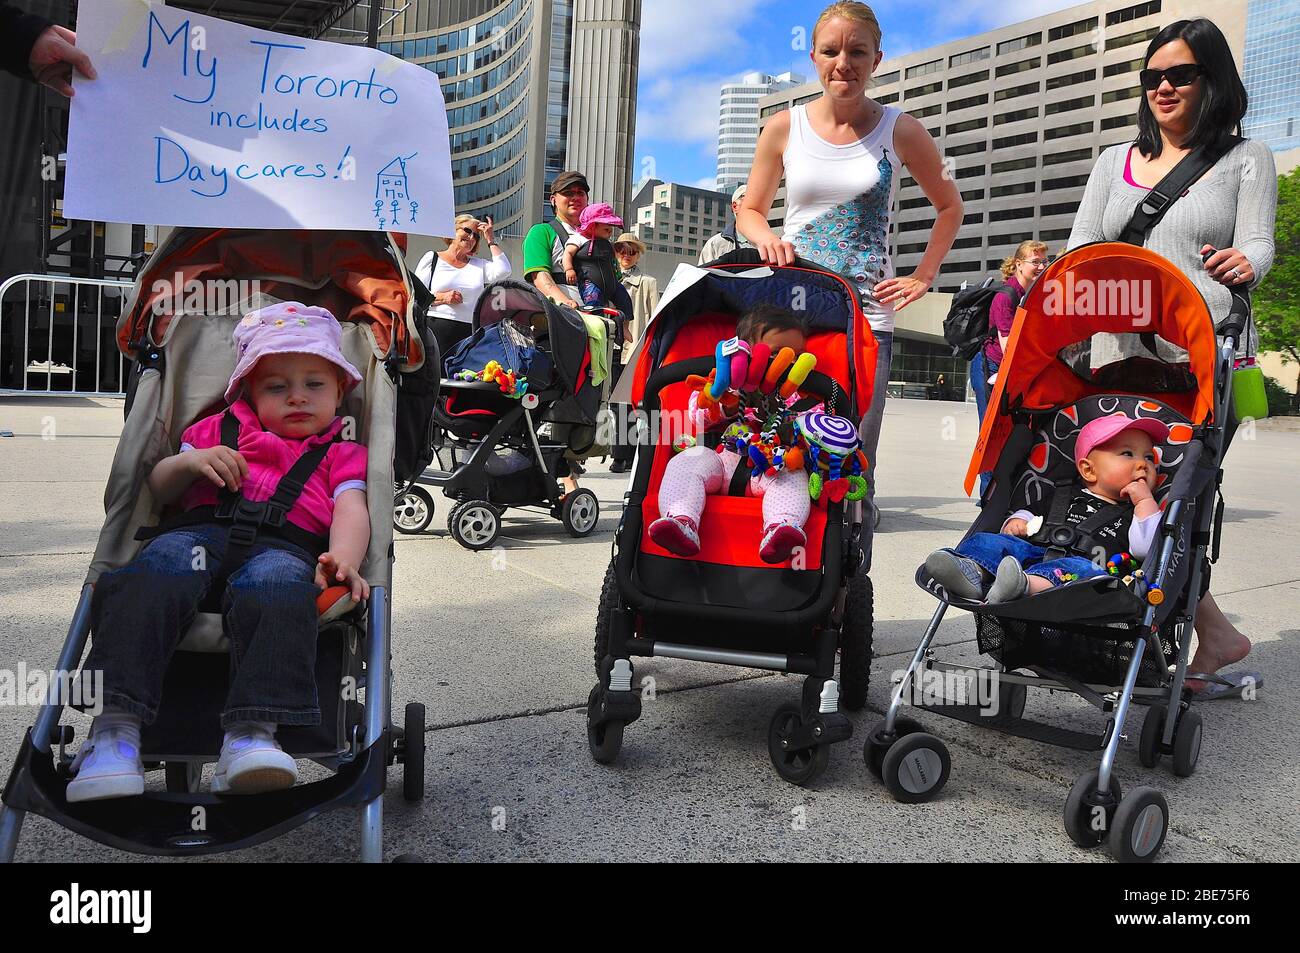 Toronto, Ontario/ Kanada - 06-09-2009: Mütter demonstrieren in Toronto zum Thema Kindertagesbetreuung mit Kinderwagen, Plakat Stockfoto